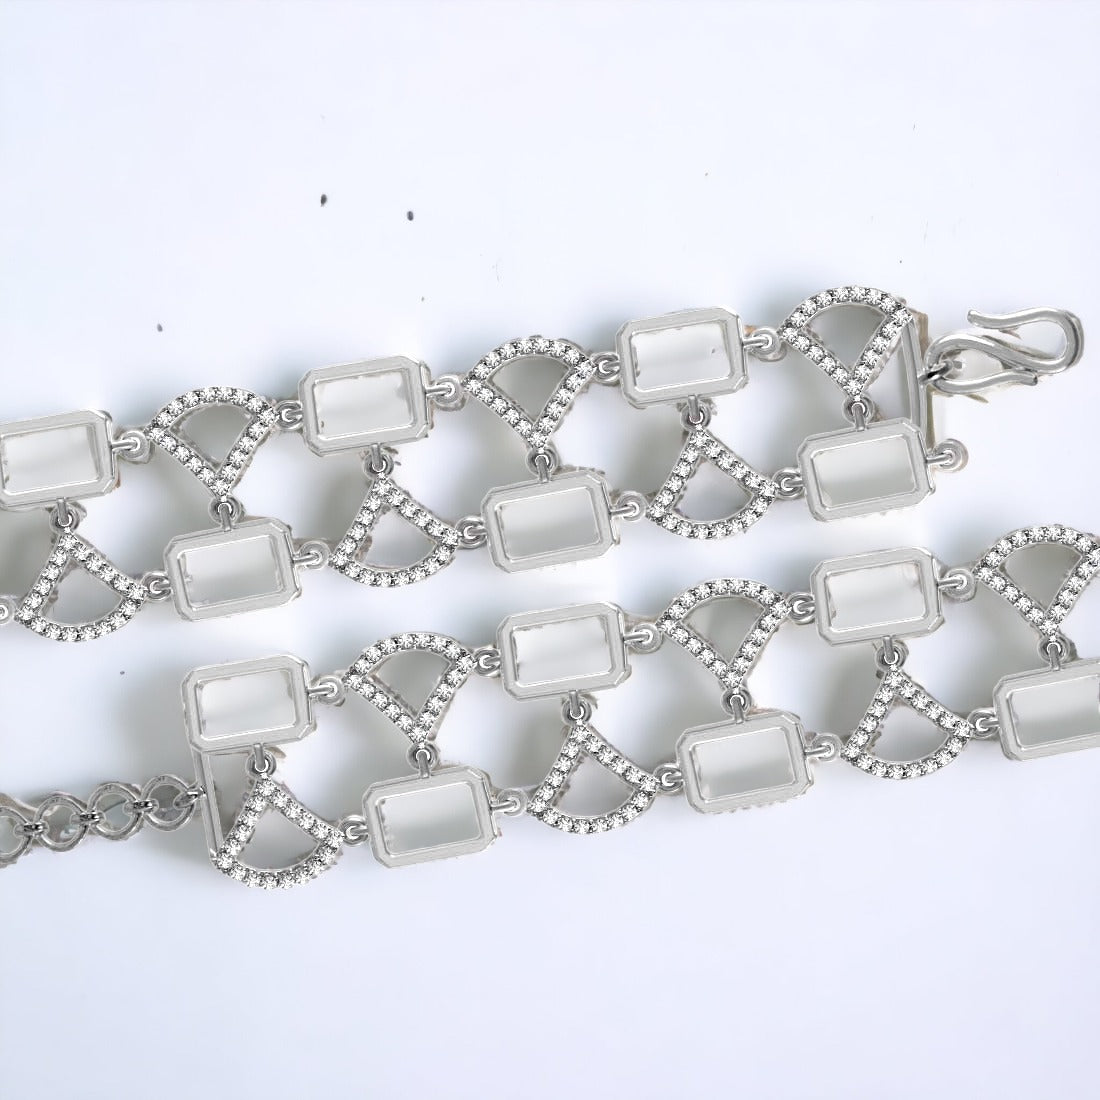 Sterling Silver Triangle Linked Bracelet For Women & Girls